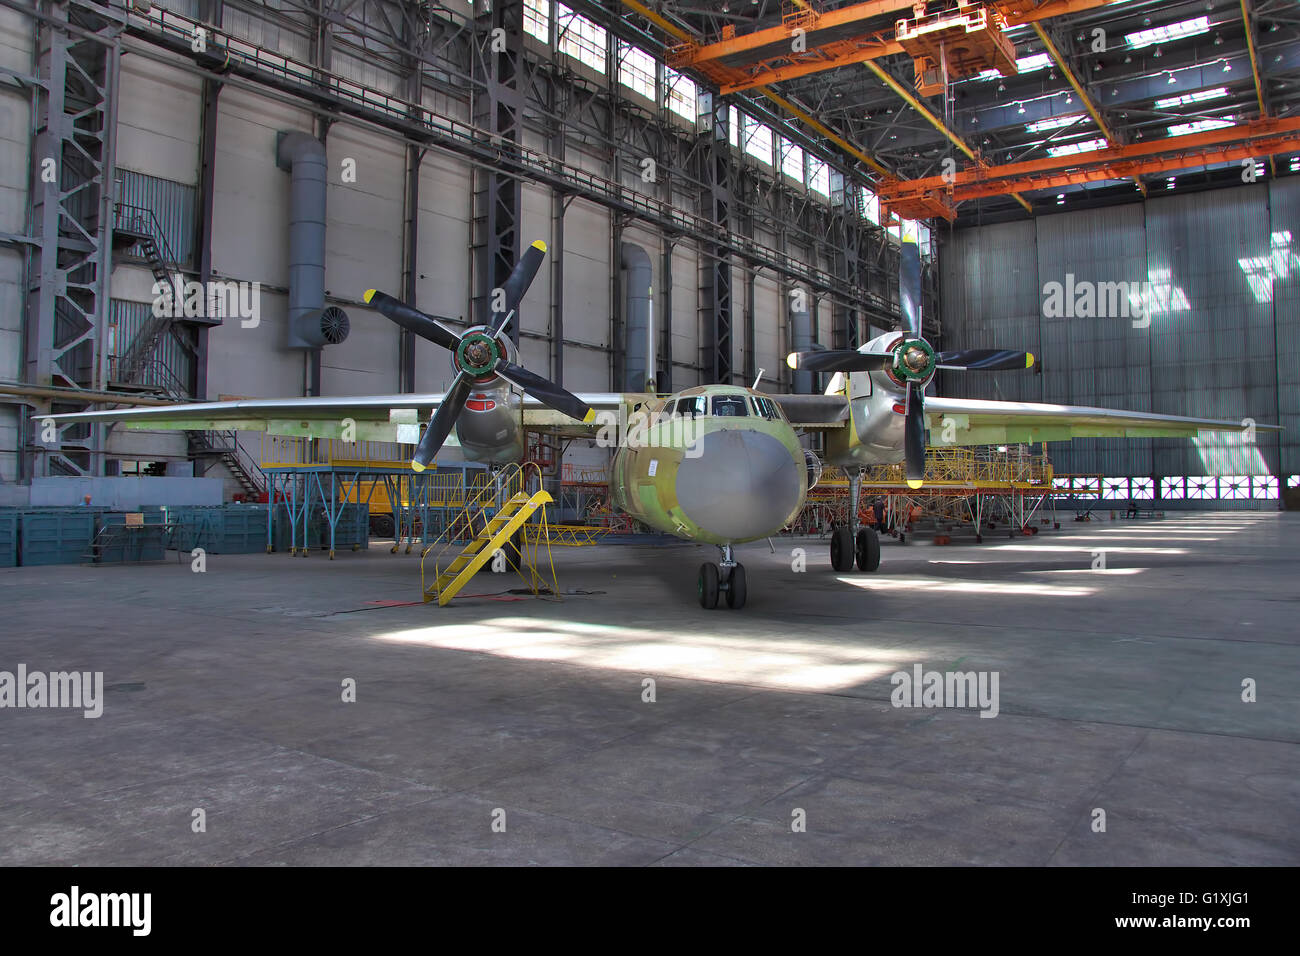 Kiev, Ukraine - August 3, 2011: Antonov An-32 cargo plane being final assembled at the aircraft manufacturing hangar Stock Photo